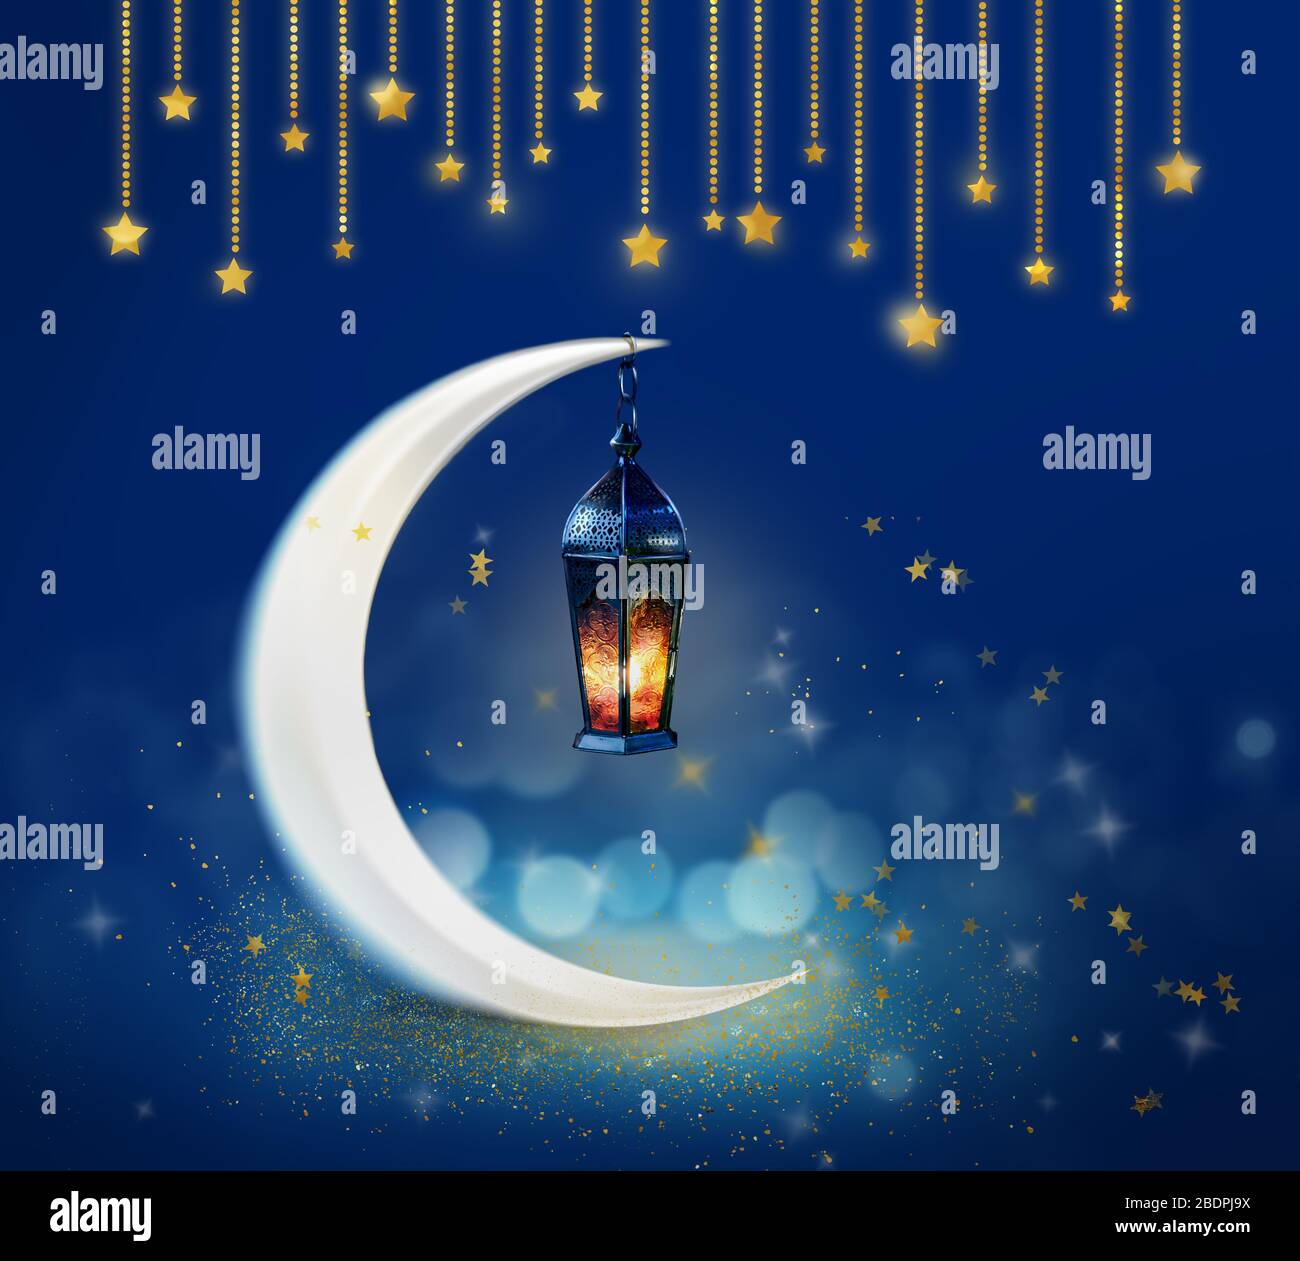 Ramadan Kareem background. Blue Greeting Card for Muslim Holidays and Ramadan with moon, gold stars and lantern. Stock Photo